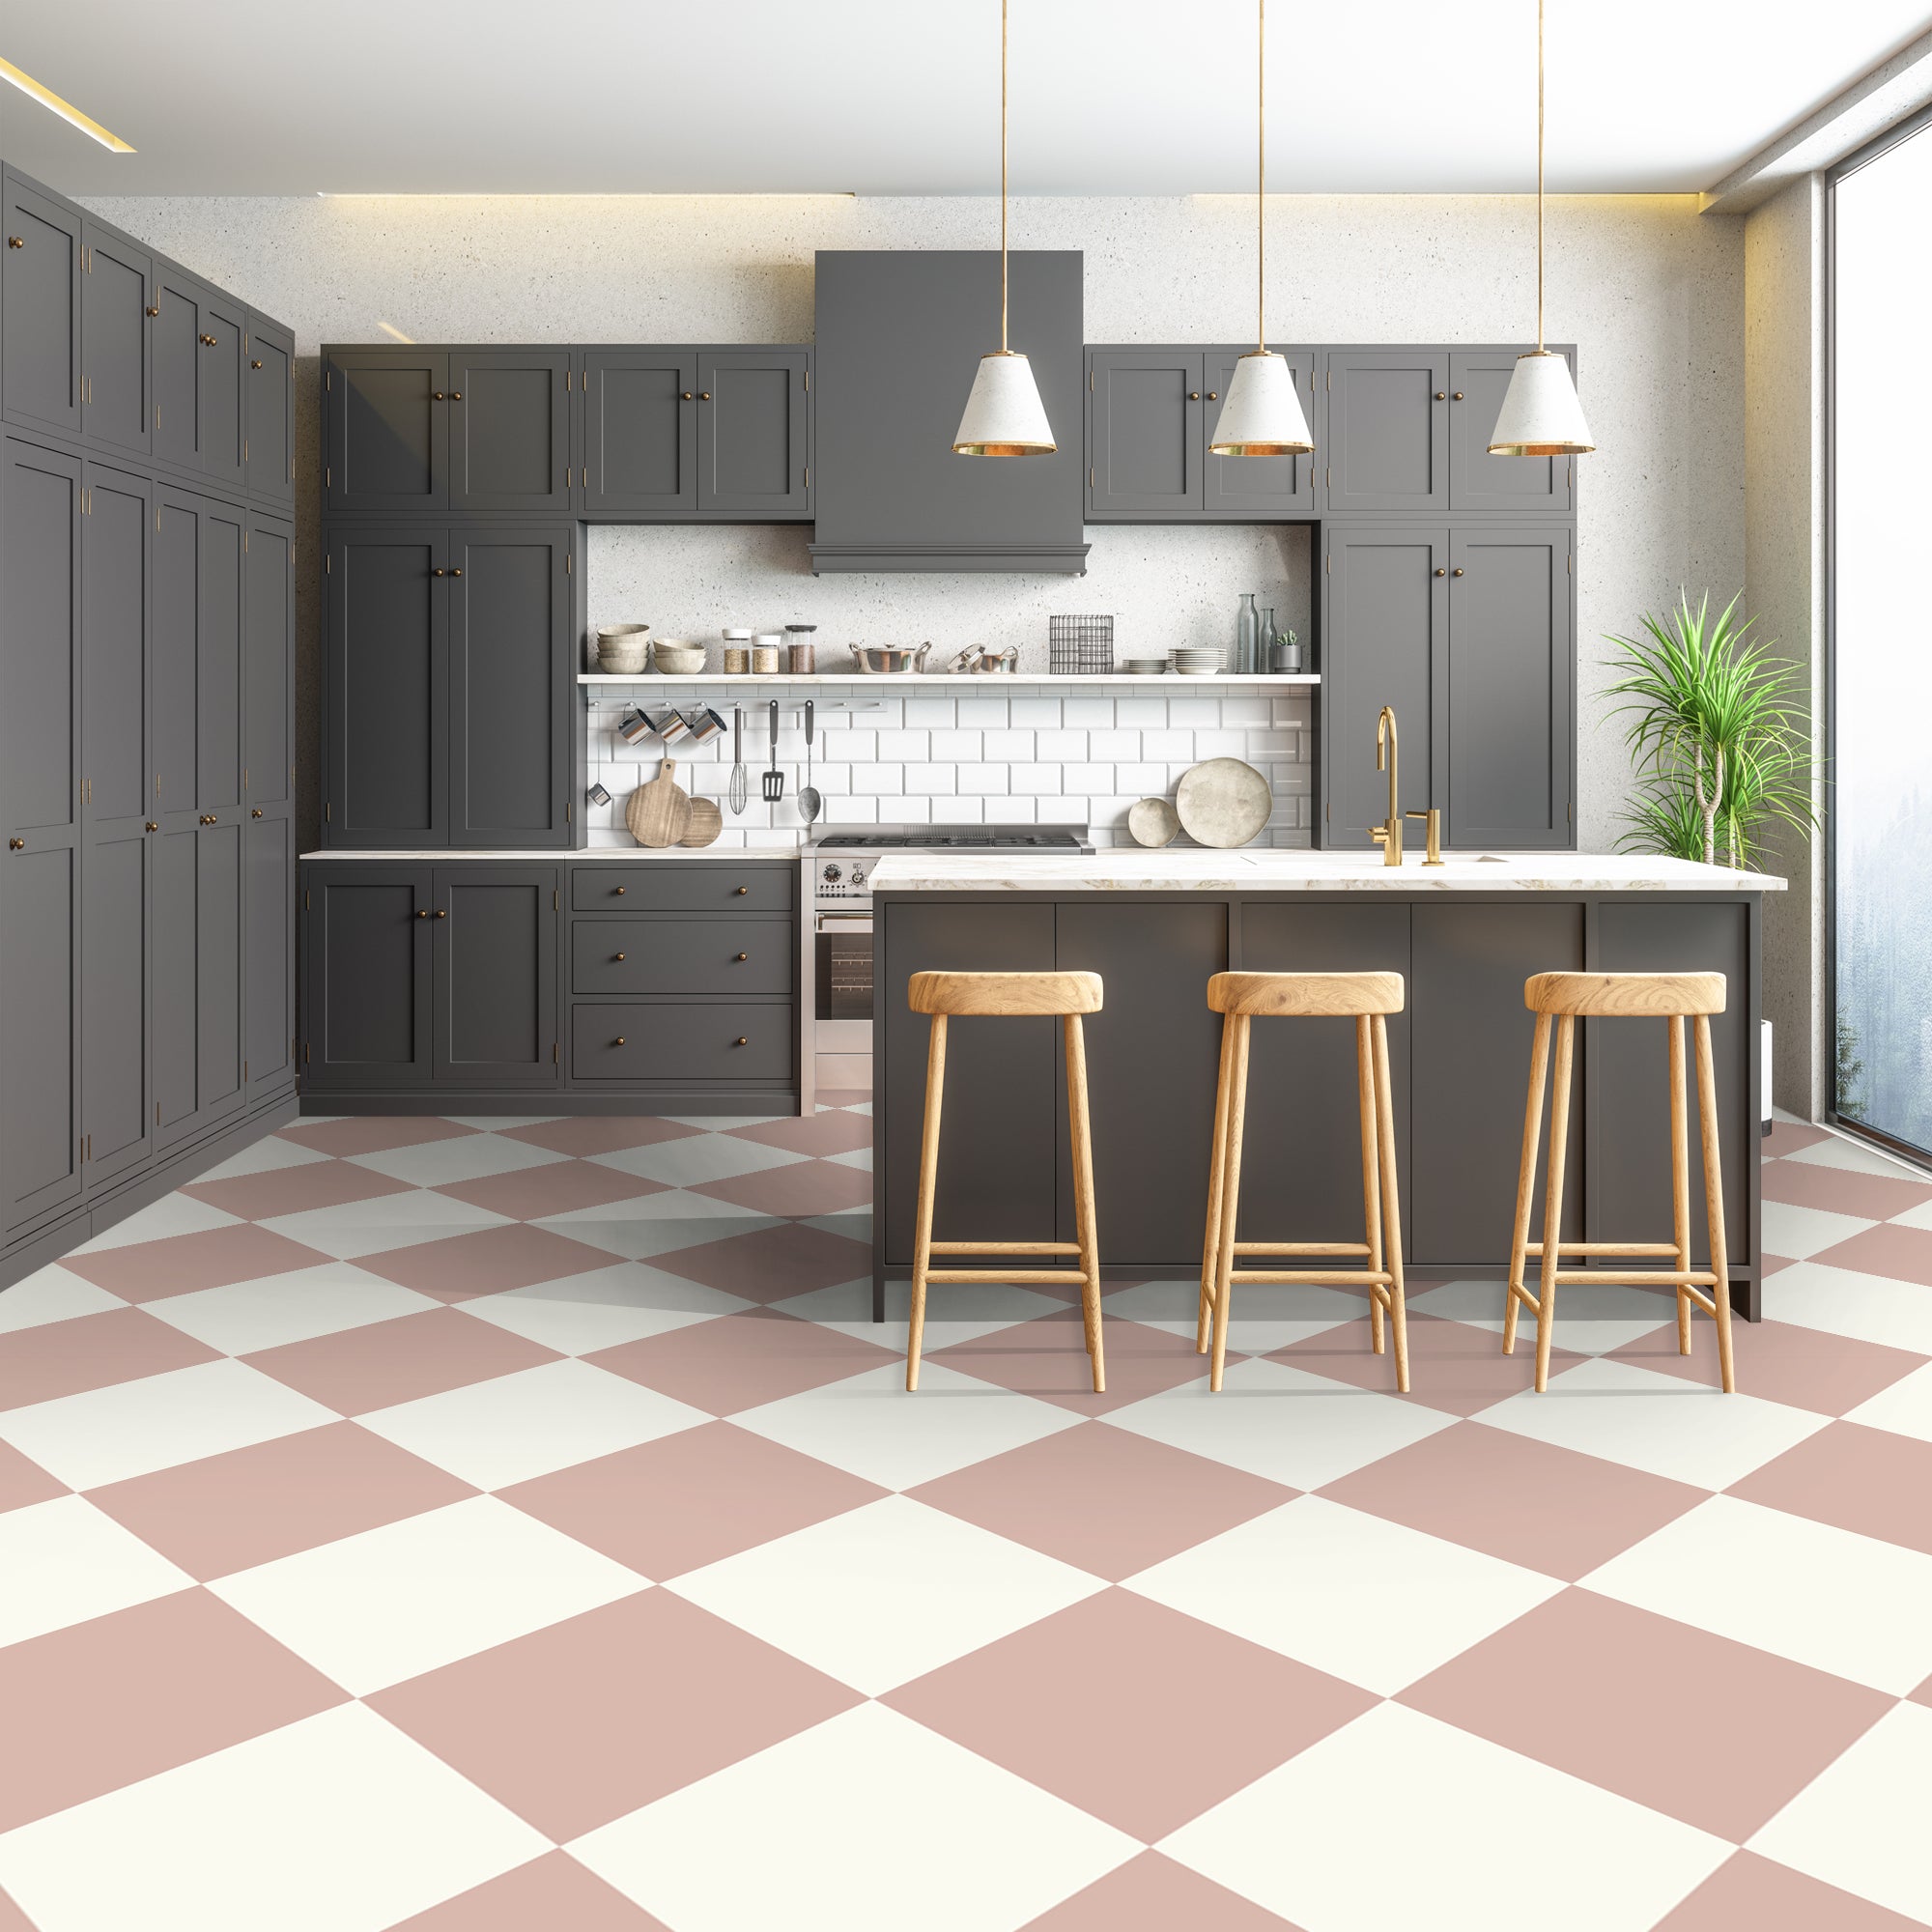 Checkered Design - Pink (Large) Adhesive Floor/Wall/Window Vinyl